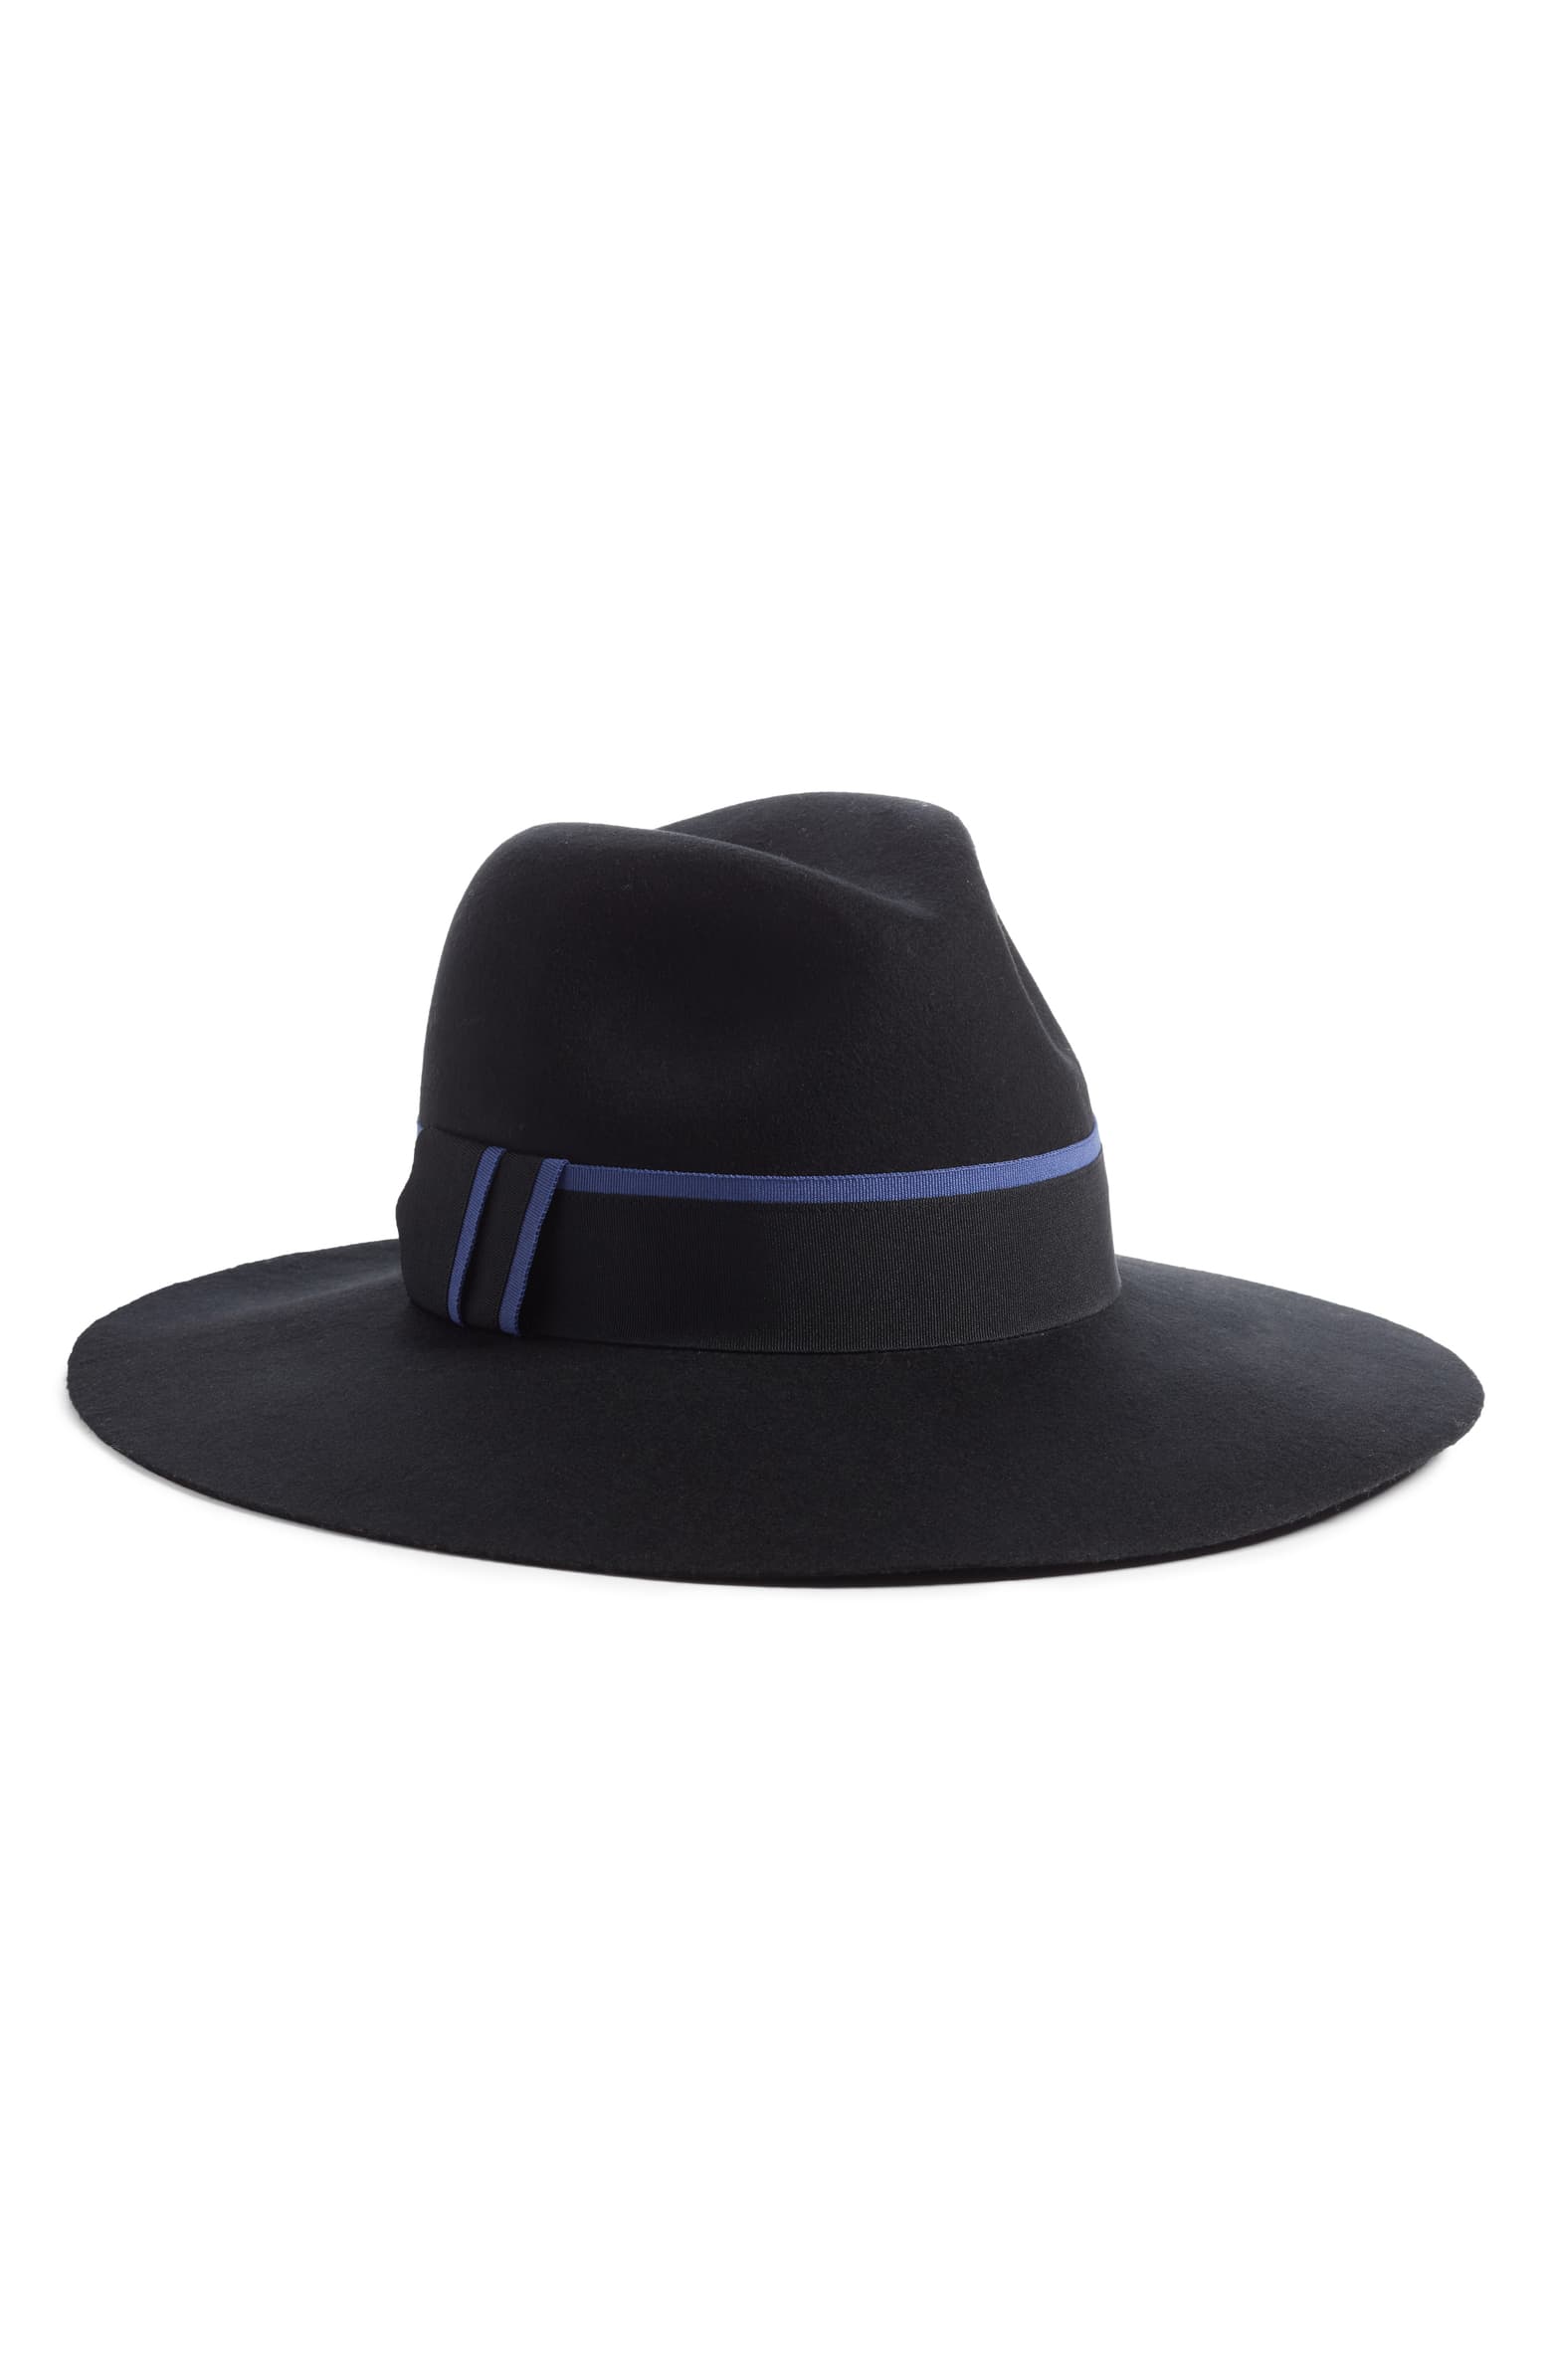 Halogen Felt Panama Hat